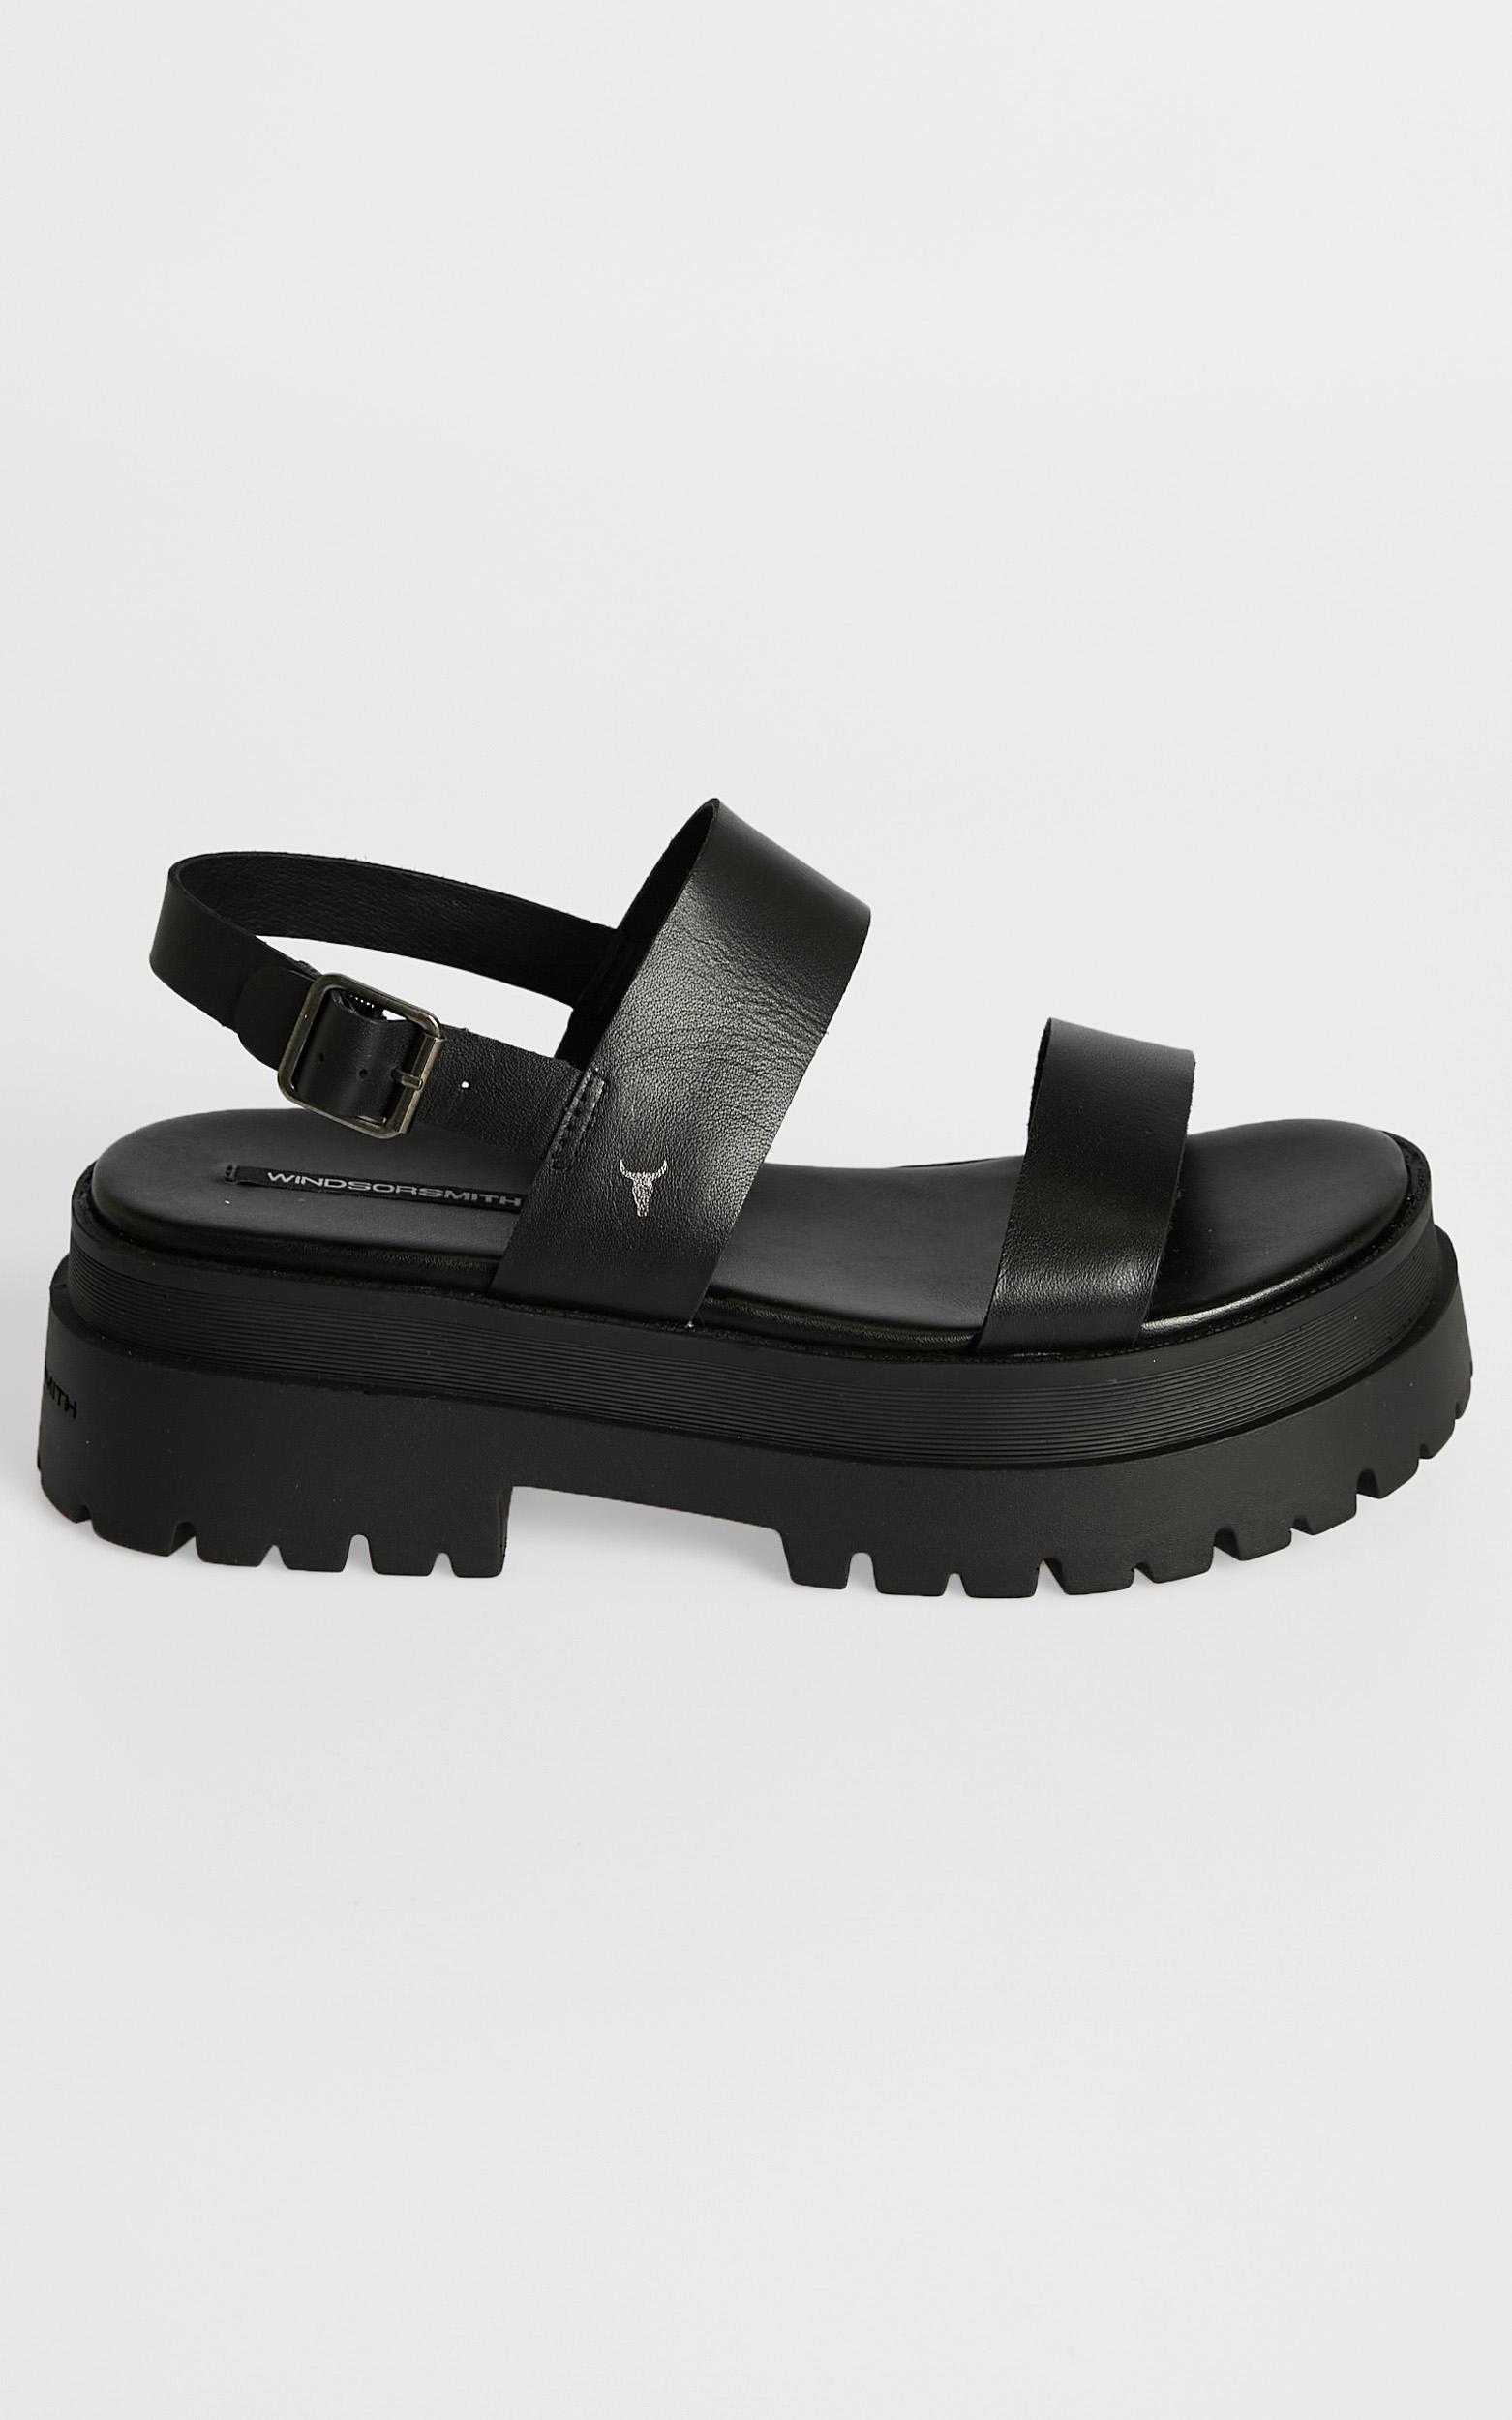 Windsor Smith - Tasty Sandals in Black Leather | Showpo